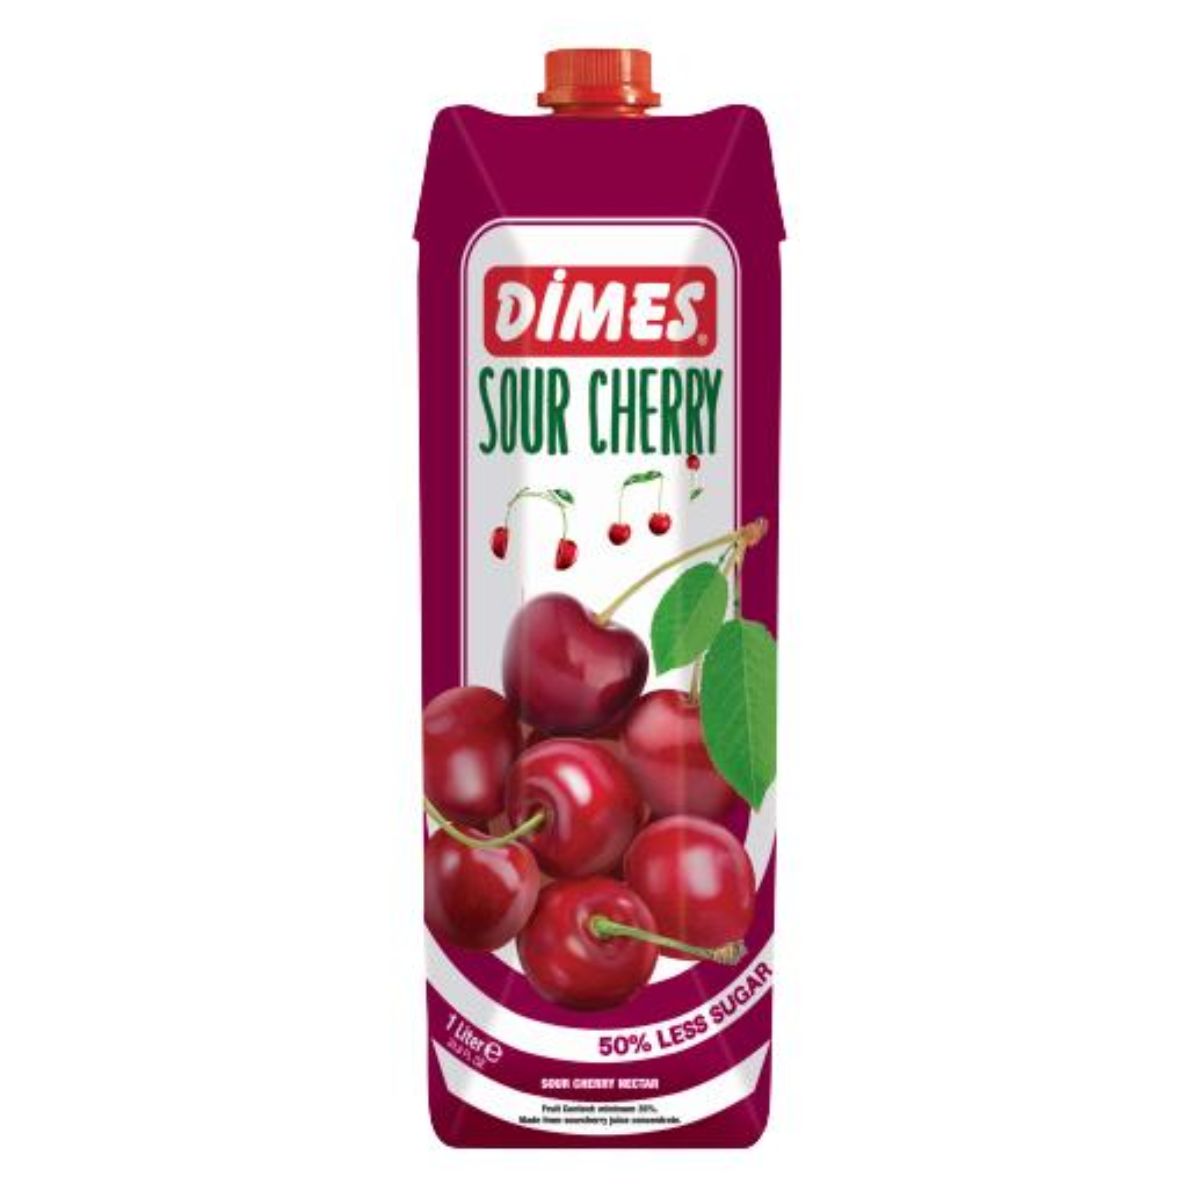 A bottle of Dimes - Sour Cherry Nectar - 1L.